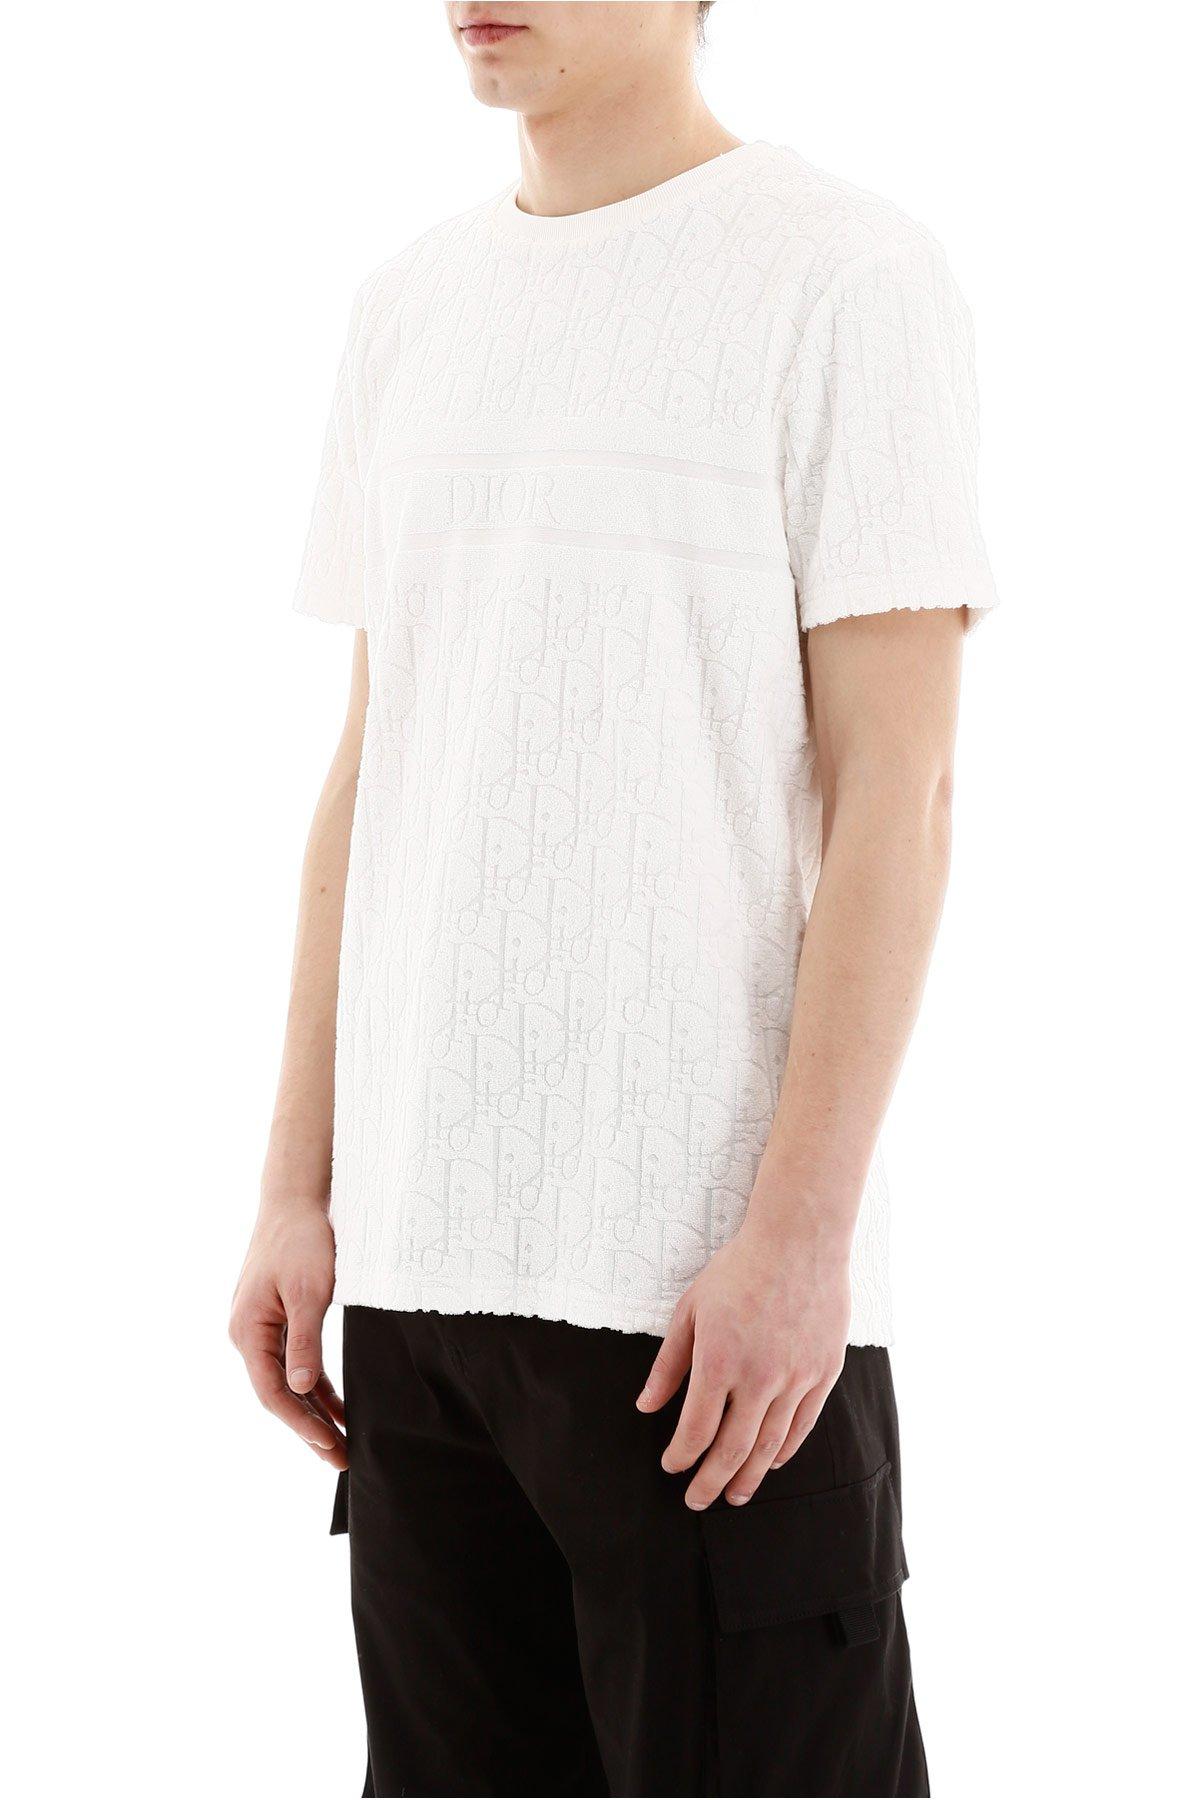 Dior Oblique T-shirt in White for Men - Lyst